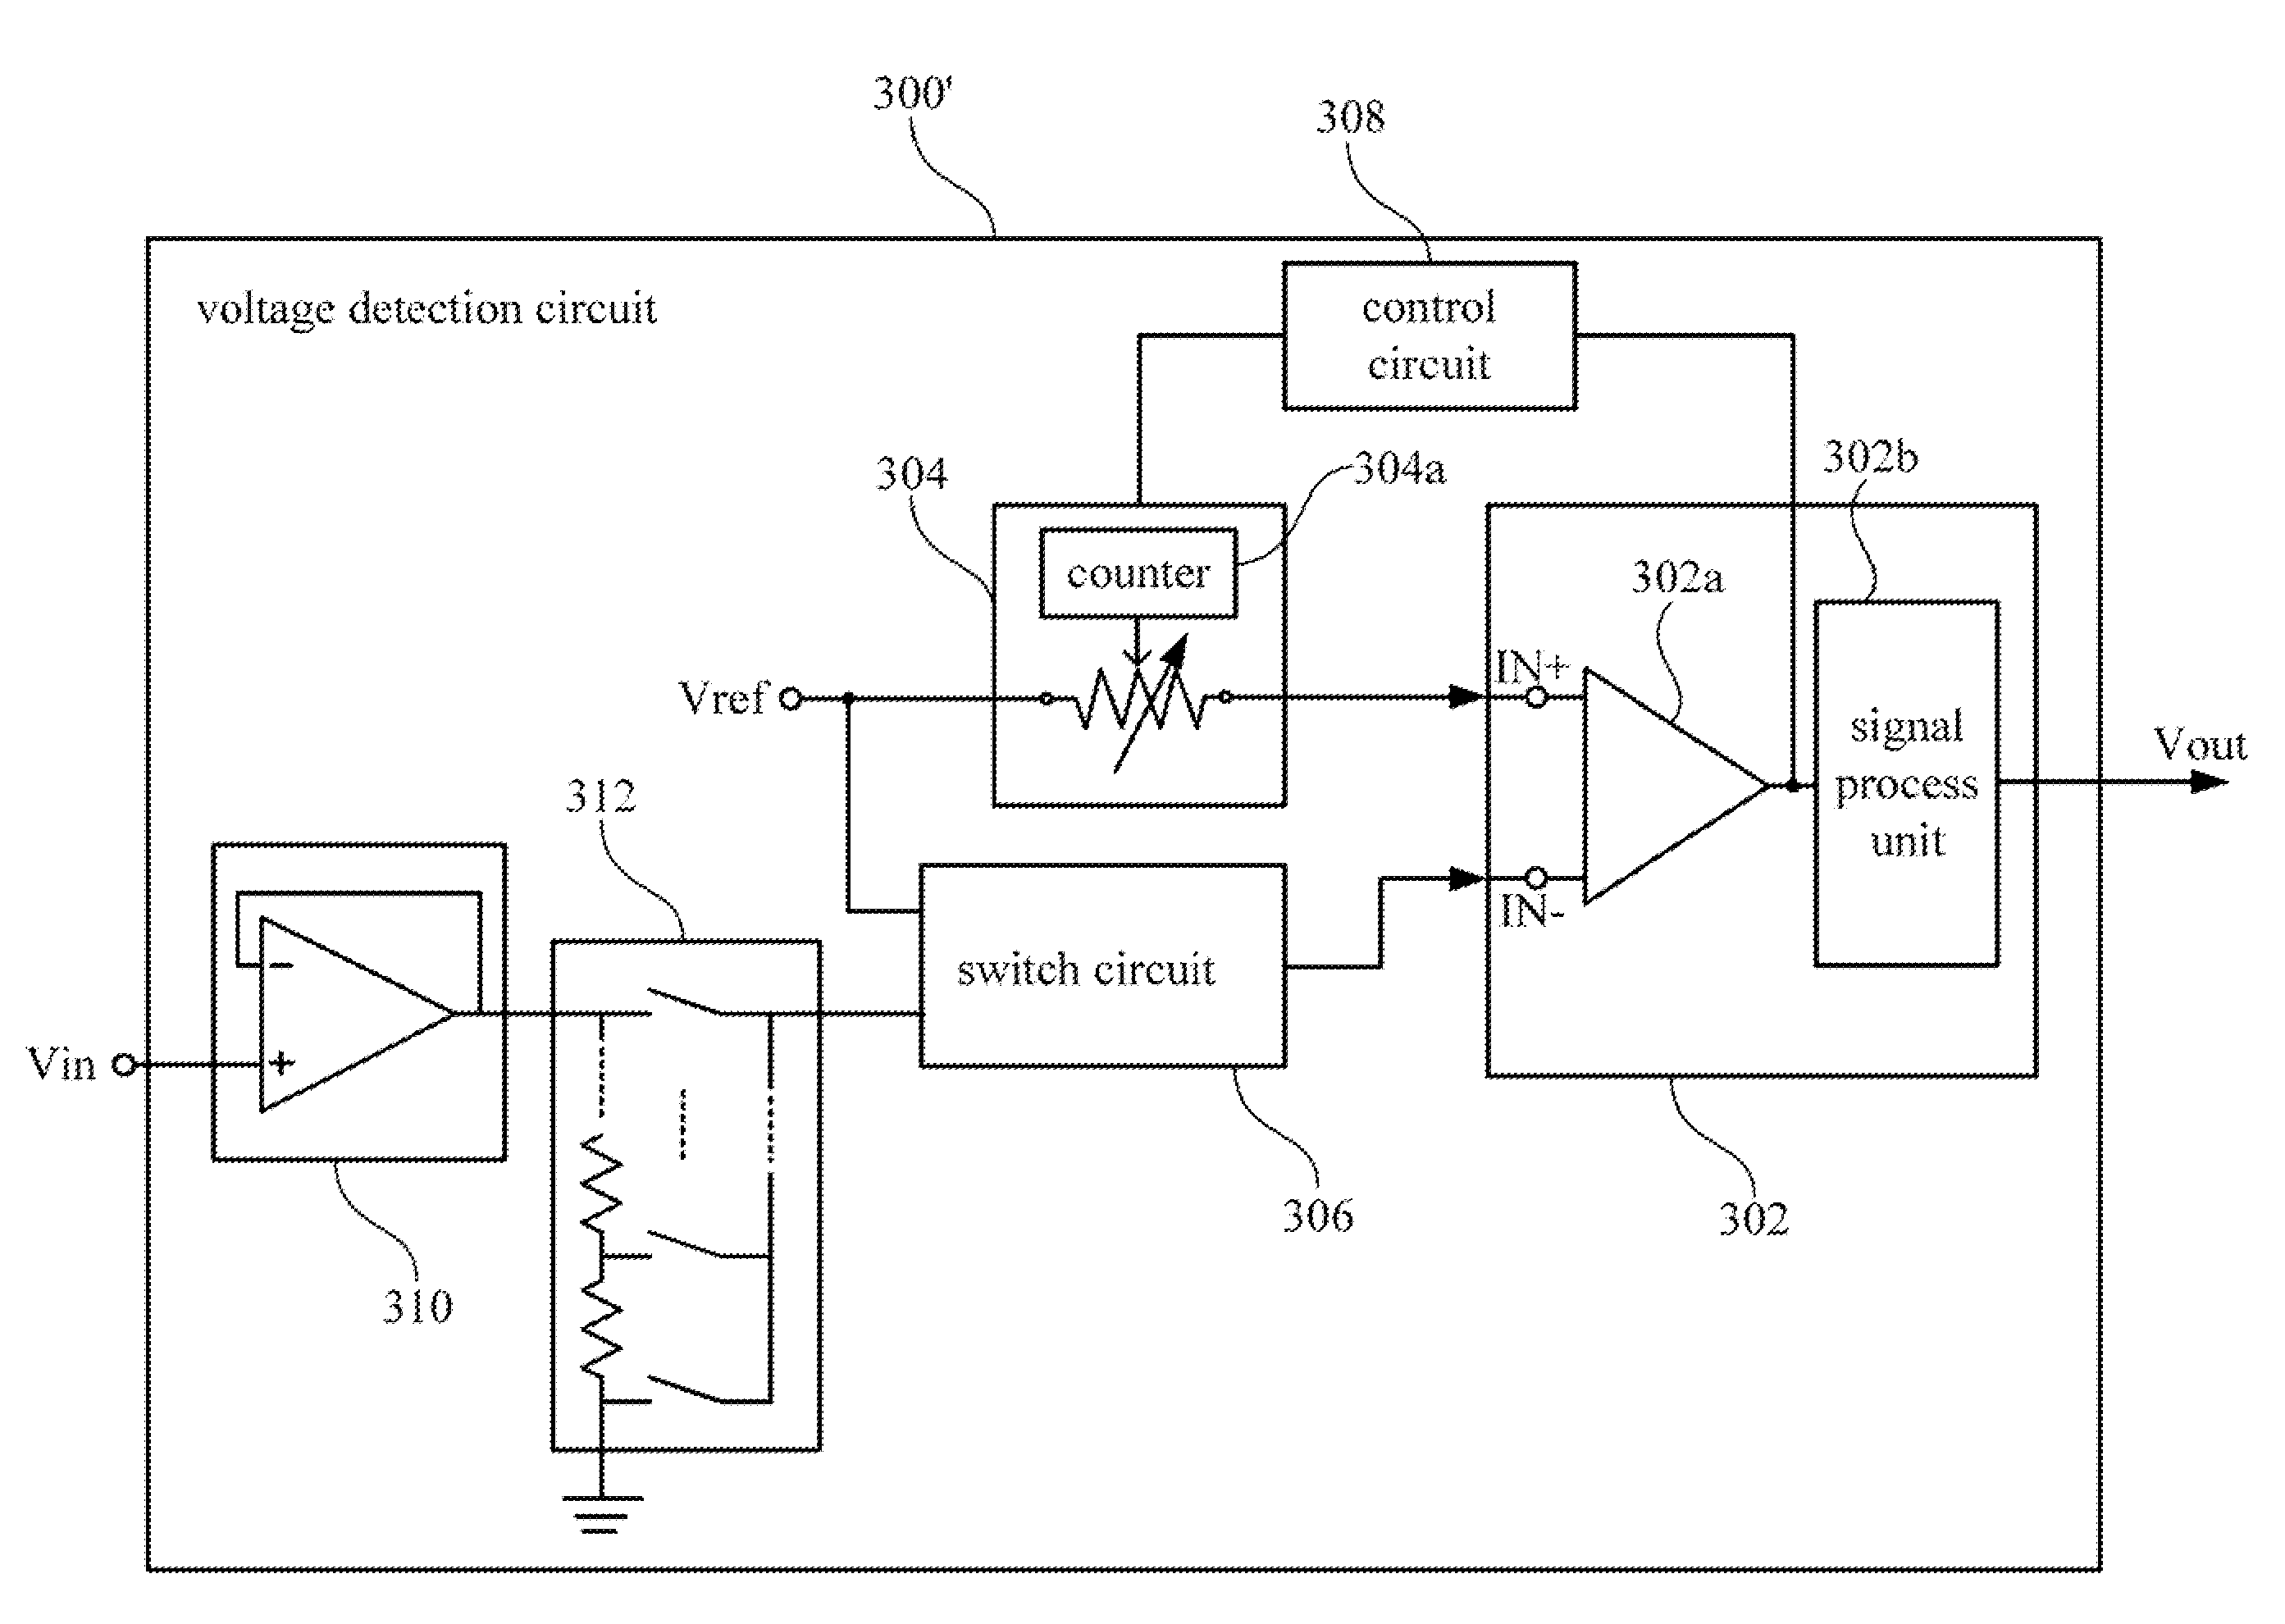 Voltage detection circuit